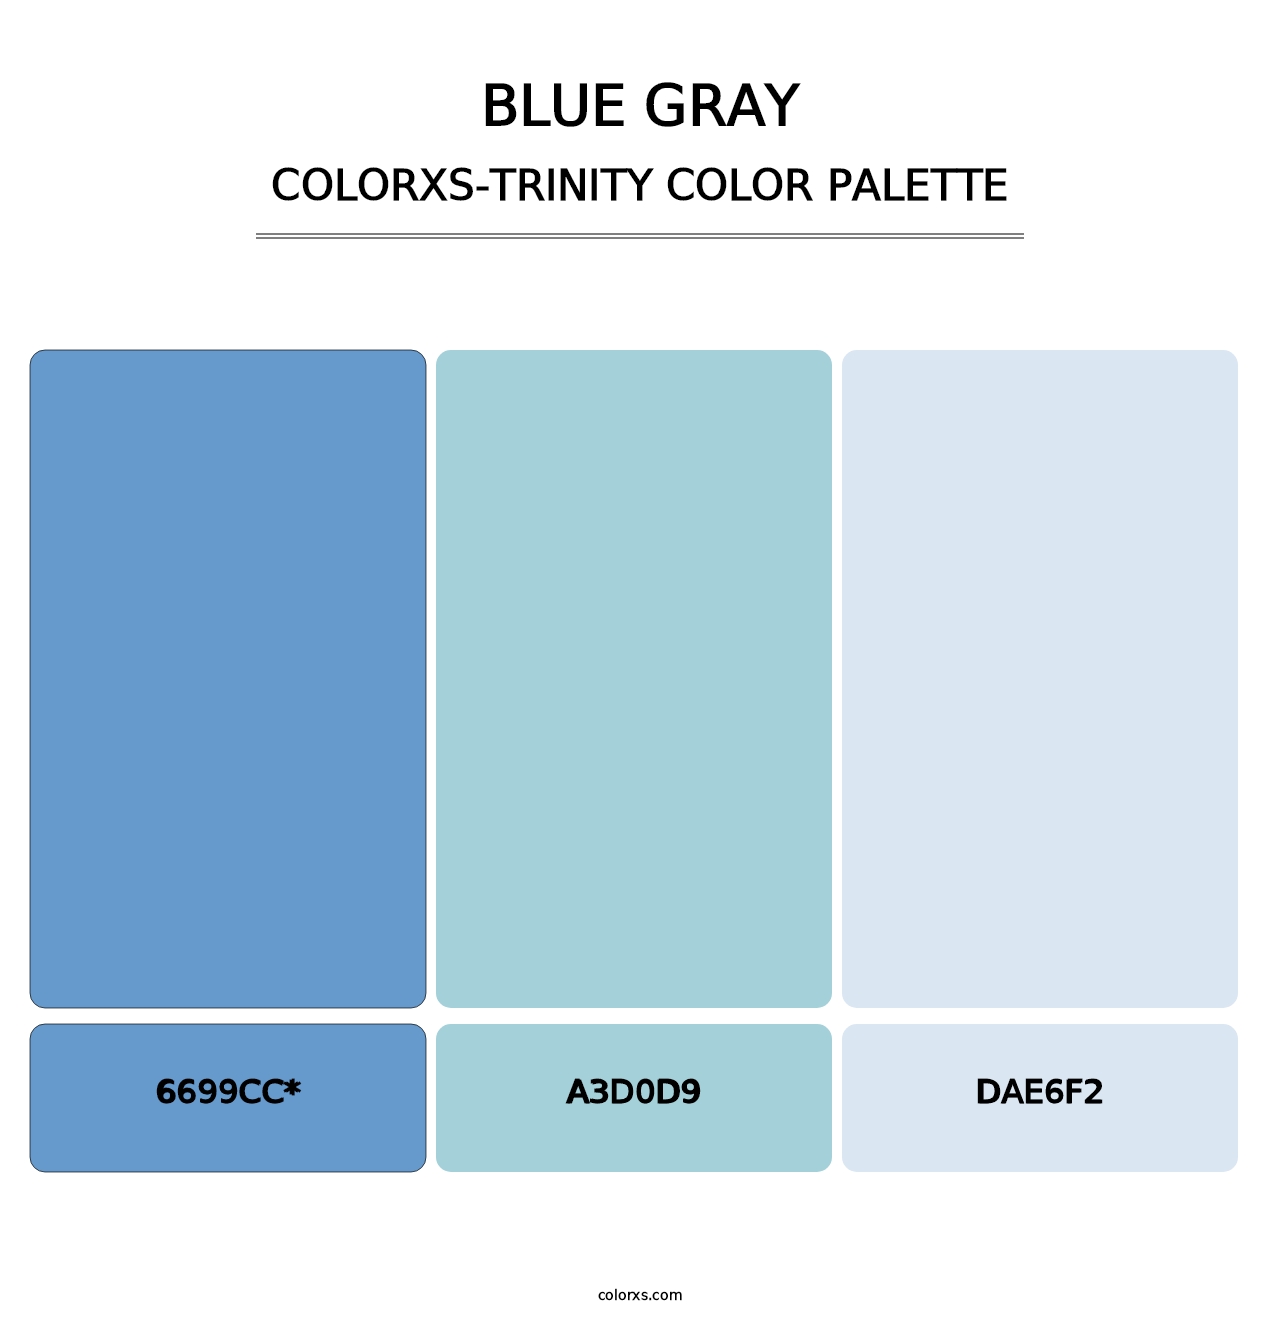 Blue Gray - Colorxs Trinity Palette